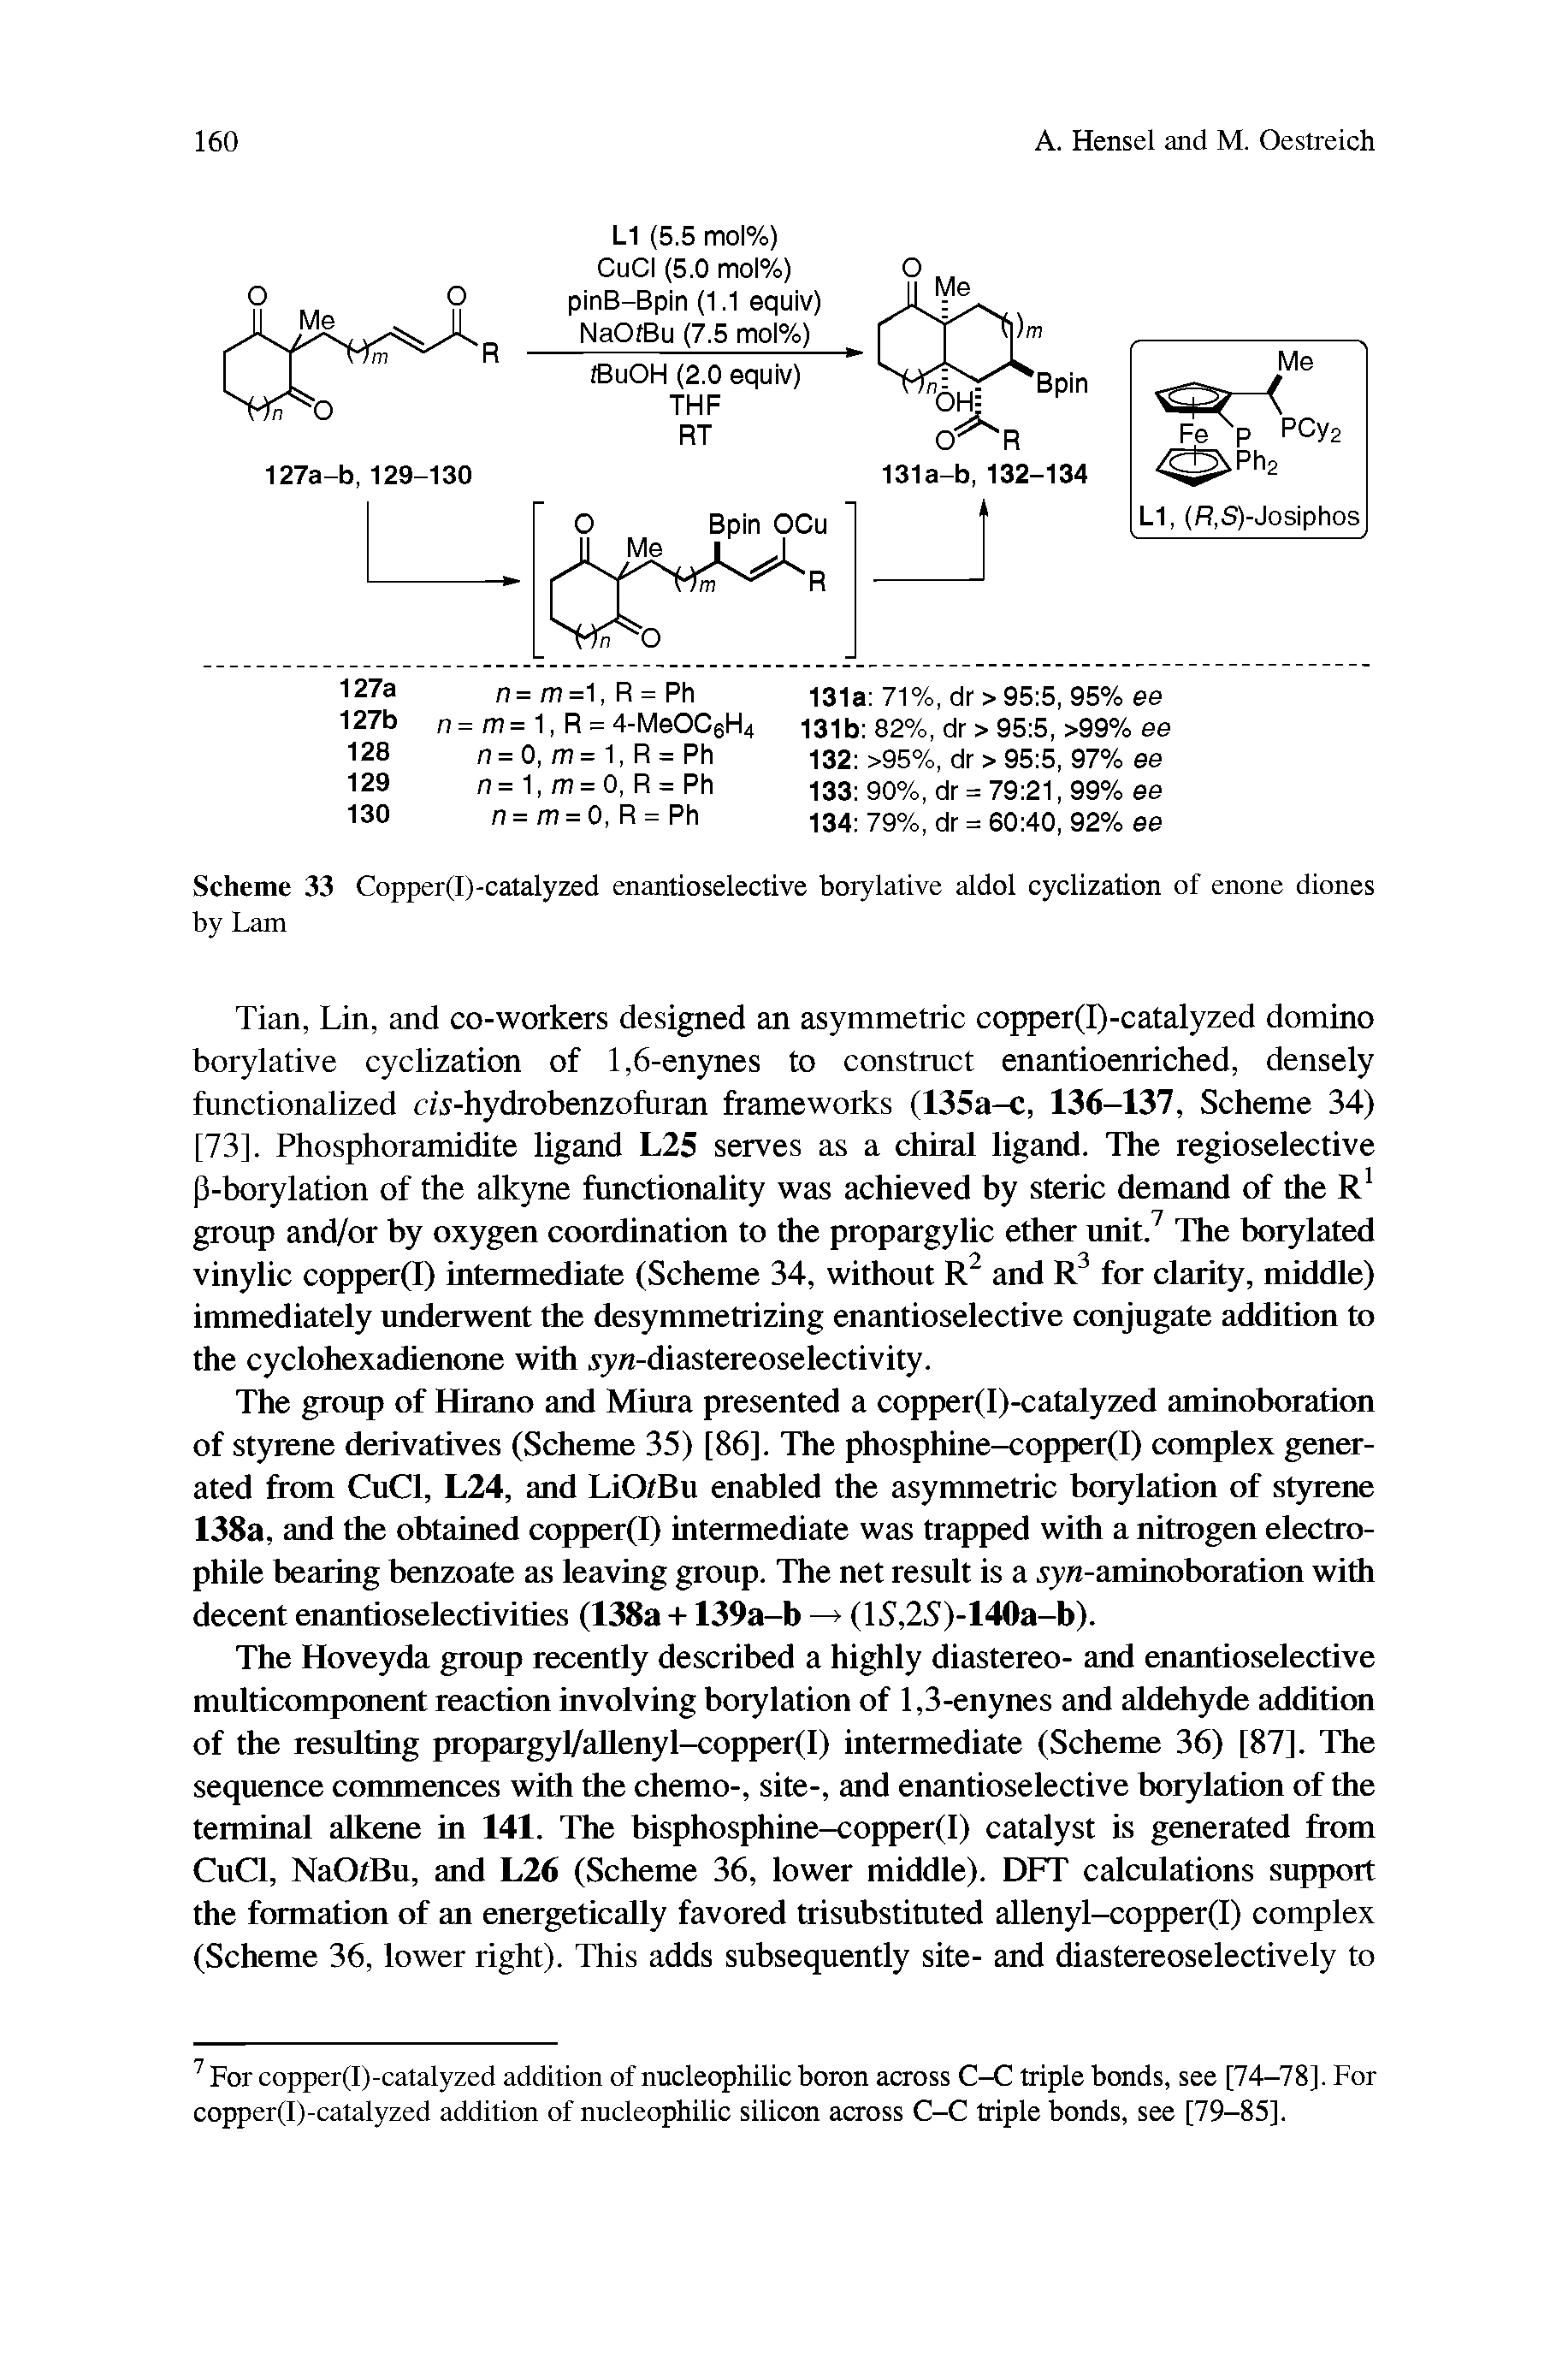 Scheme 33 Copper(I)-catalyzed enantioselective borylative aldol cyclization of enone diones by Lam...